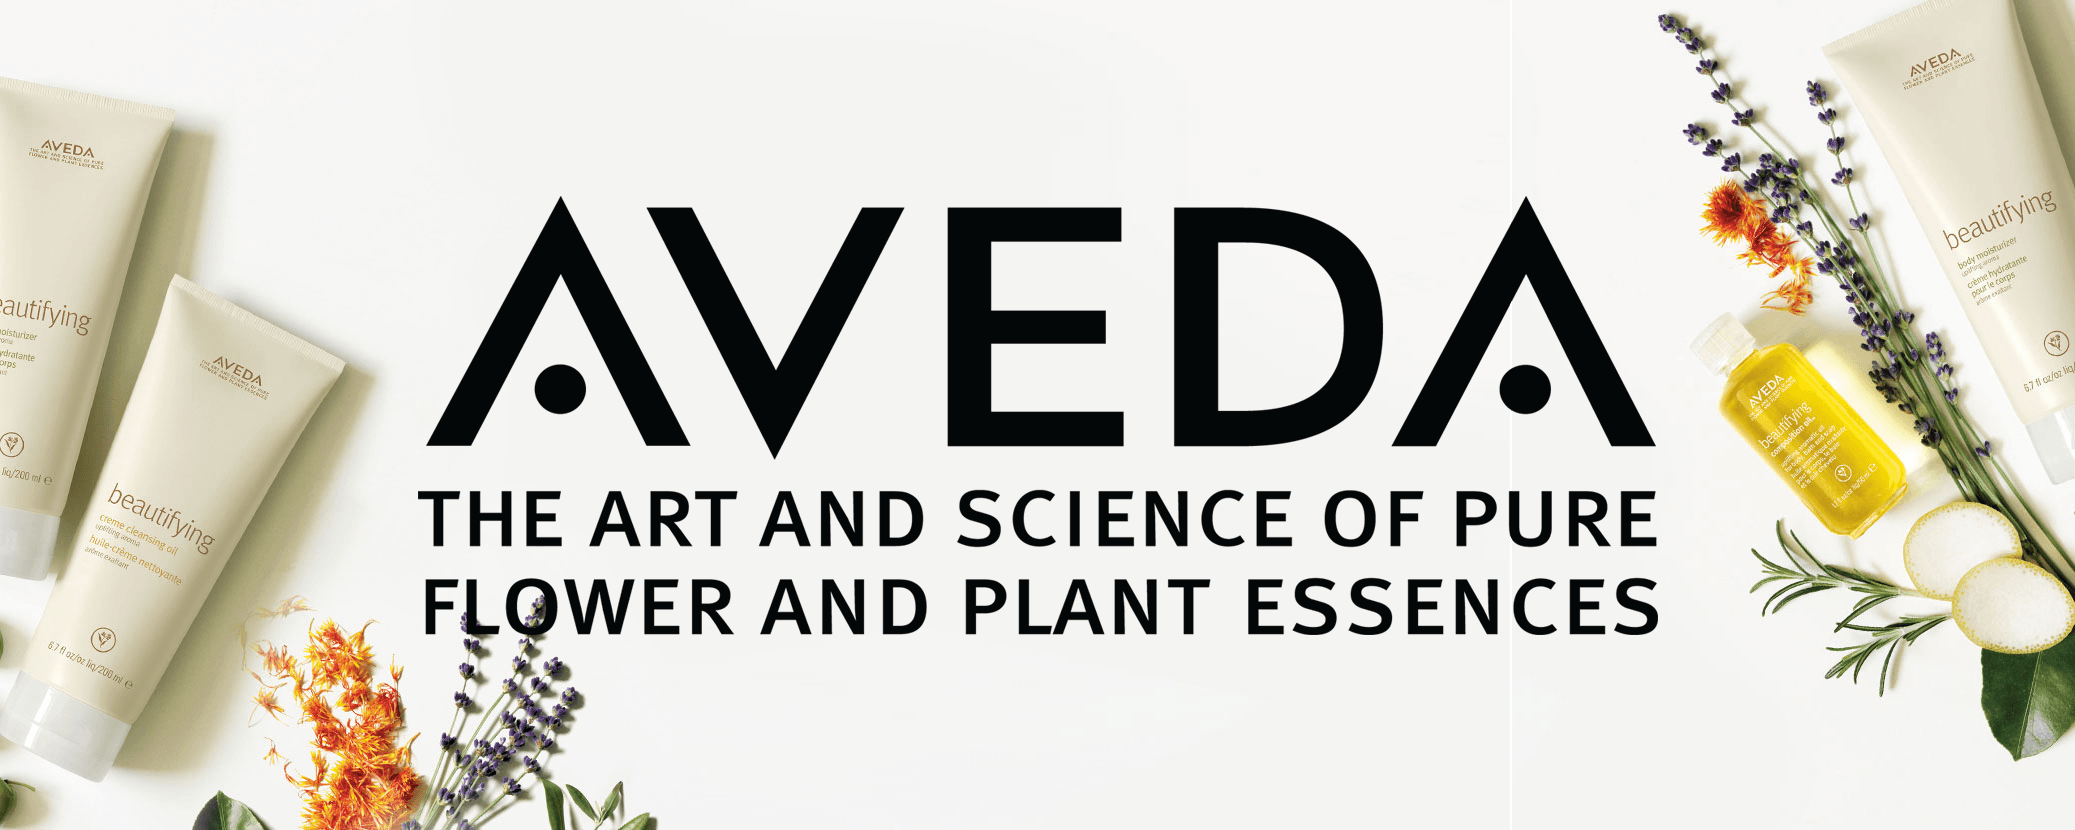 The Aveda logo